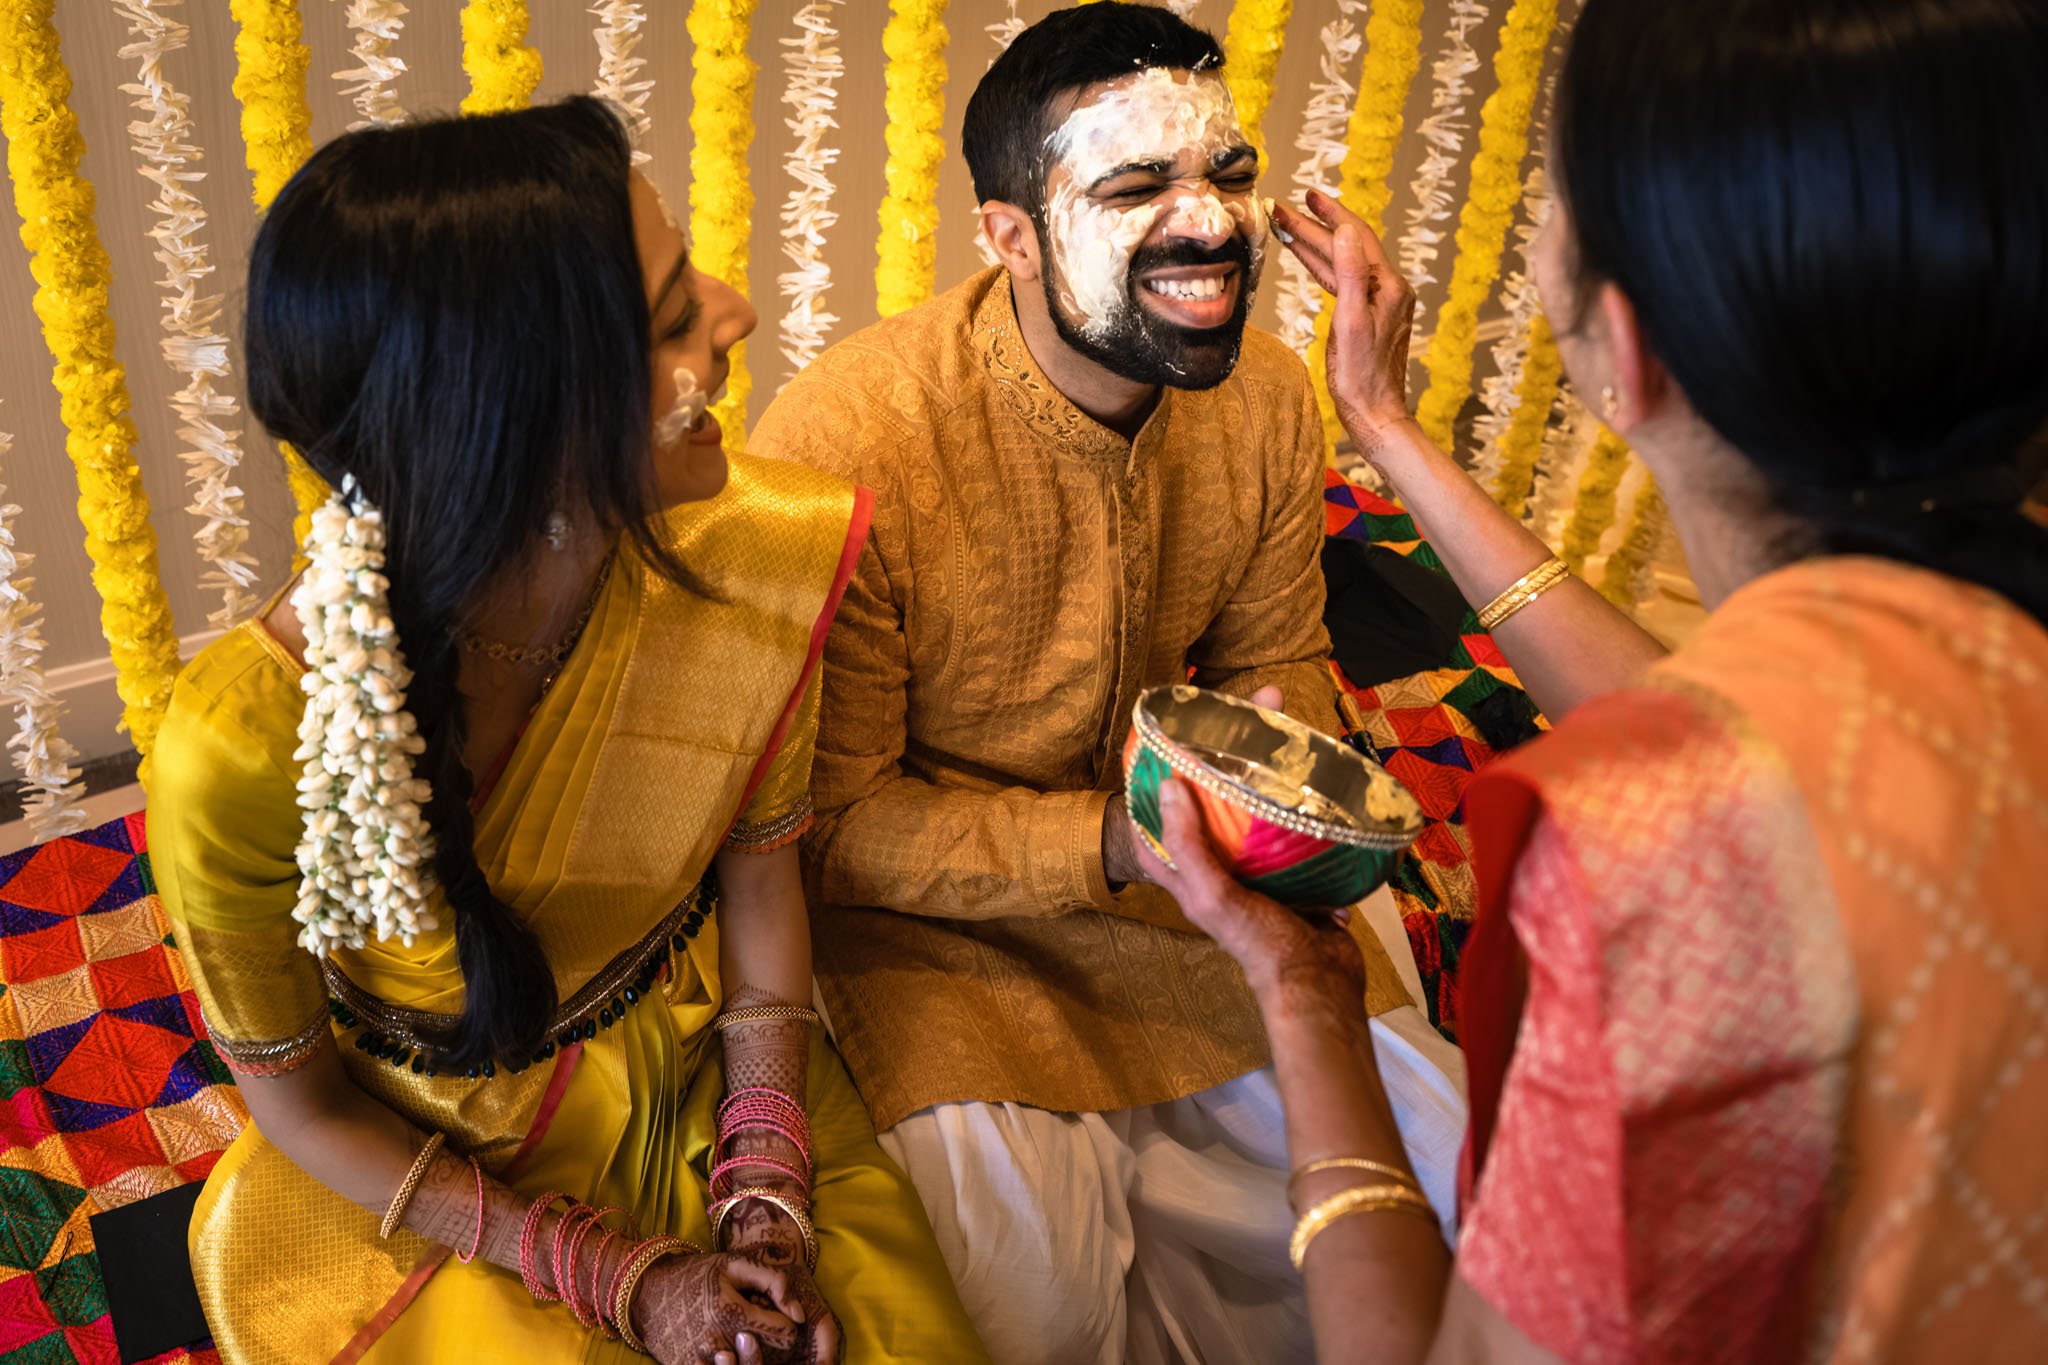 Indian wedding photojournalism in Chennai, Tamil Nadu.